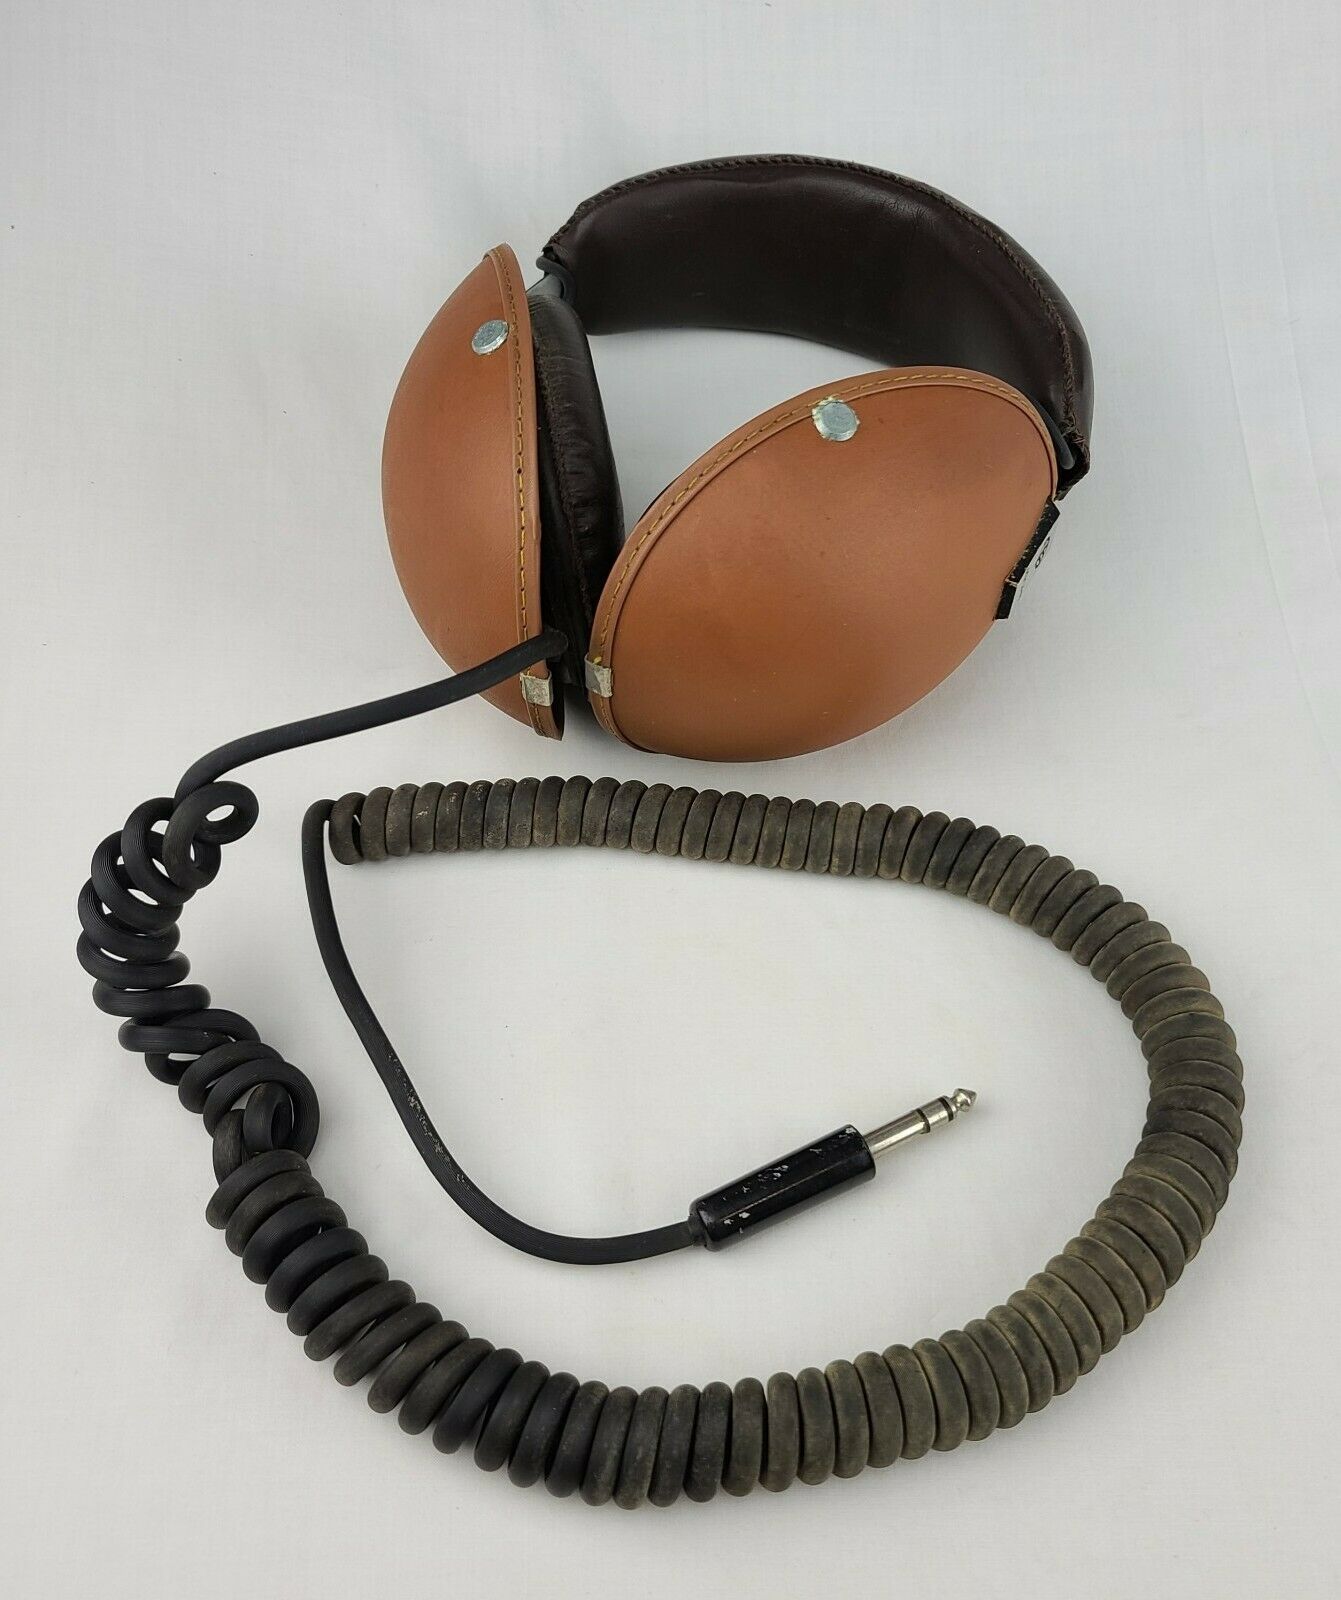 Vintage Kenwood Kh-51 Stereo Headphones Retro Electronics Tested & Working